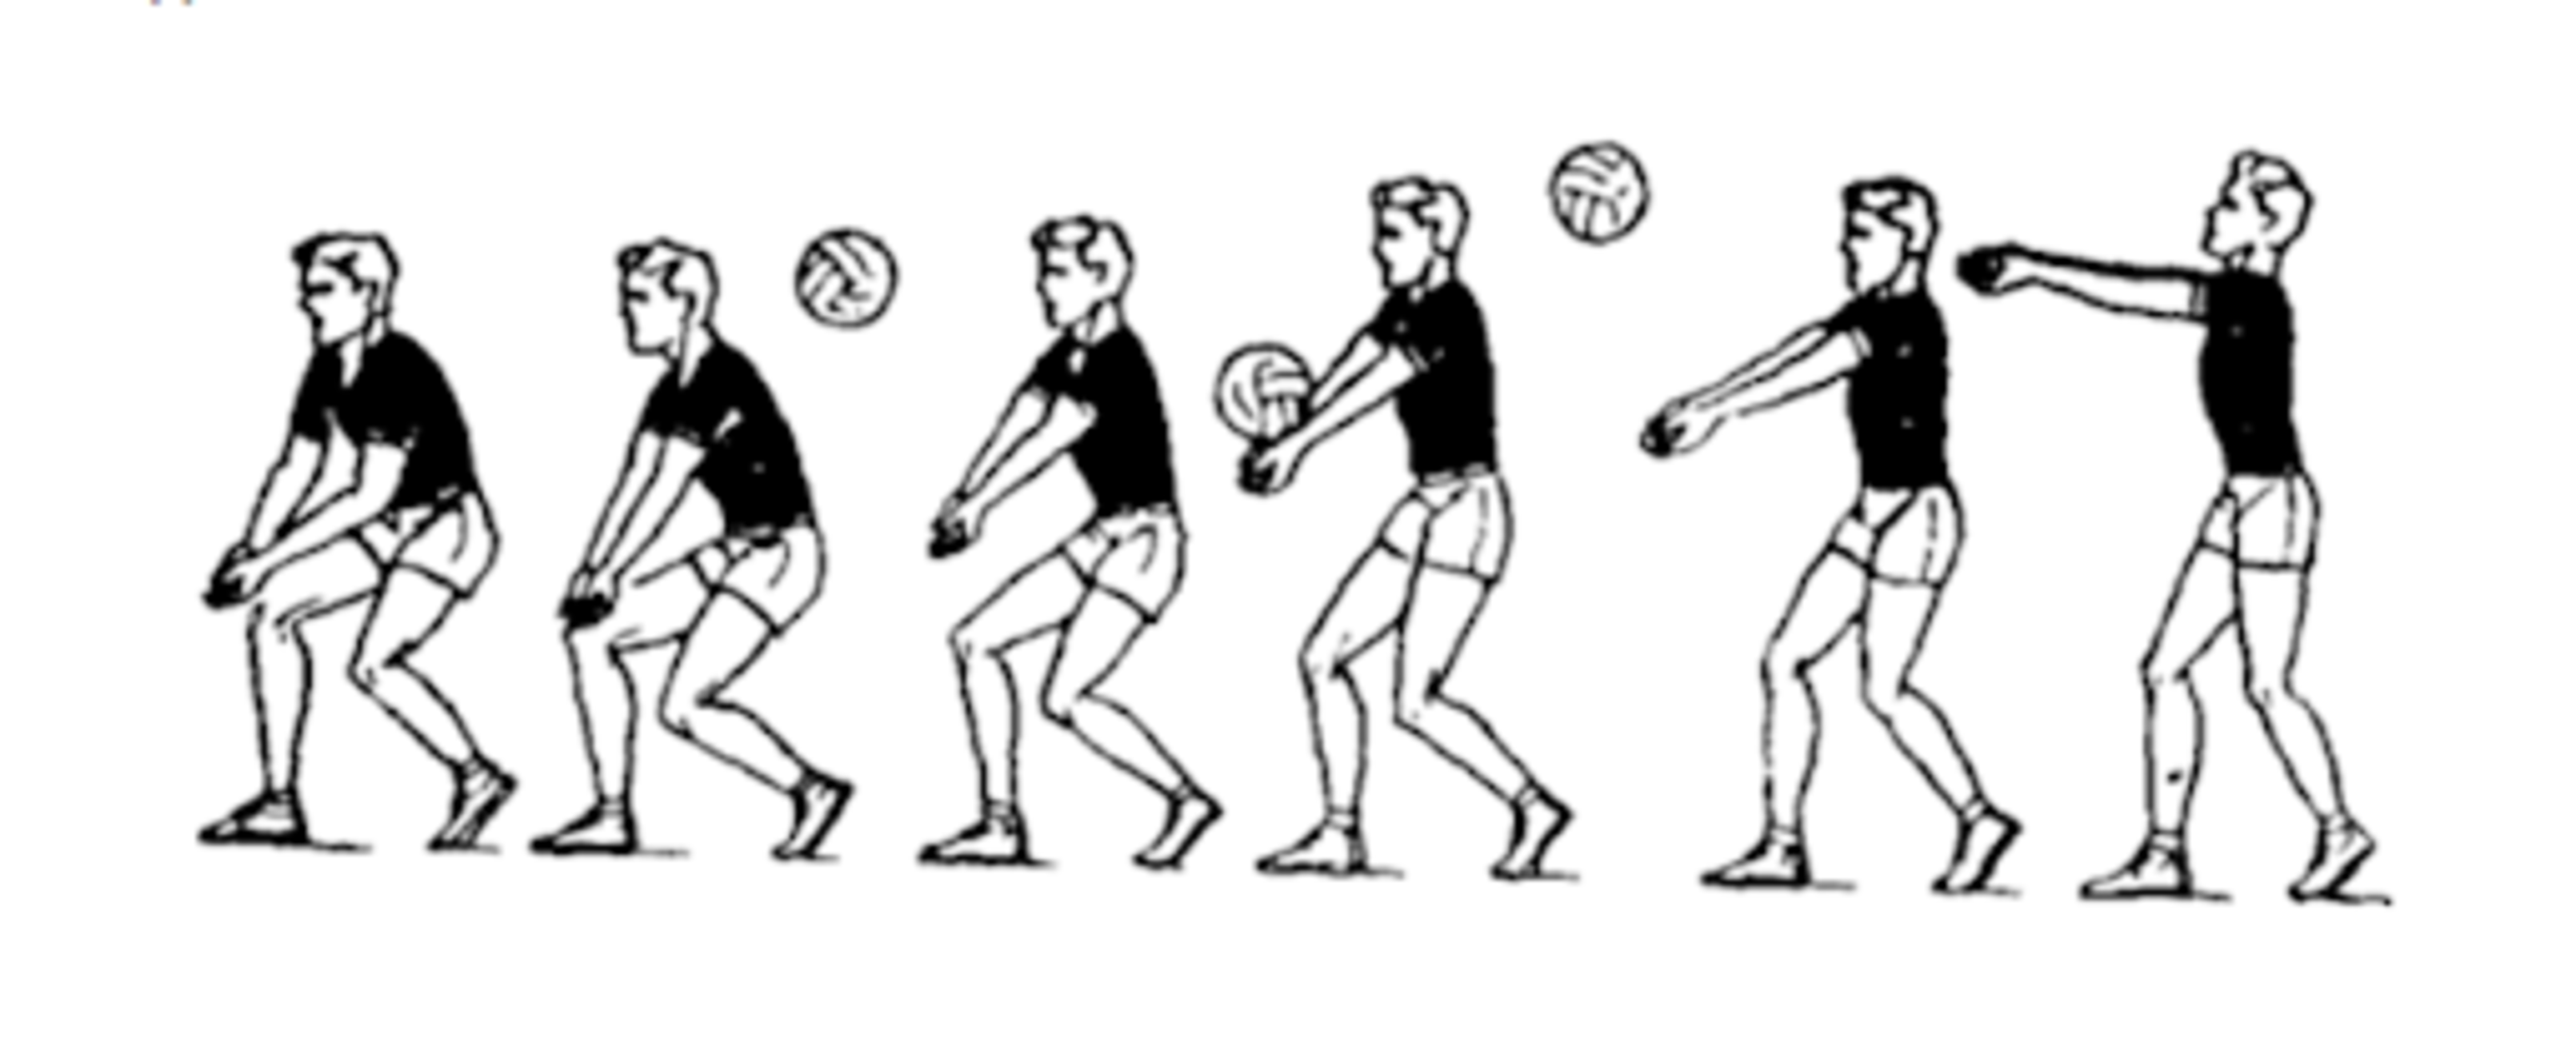 Передача мяча сверху прием снизу. Техника приема и передачи мяча снизу двумя руками в волейболе. Приём мяча снизу 2 руками в волейболе. Техника приема мяча снизу двумя руками. Прием снизу двумя руками в волейболе.